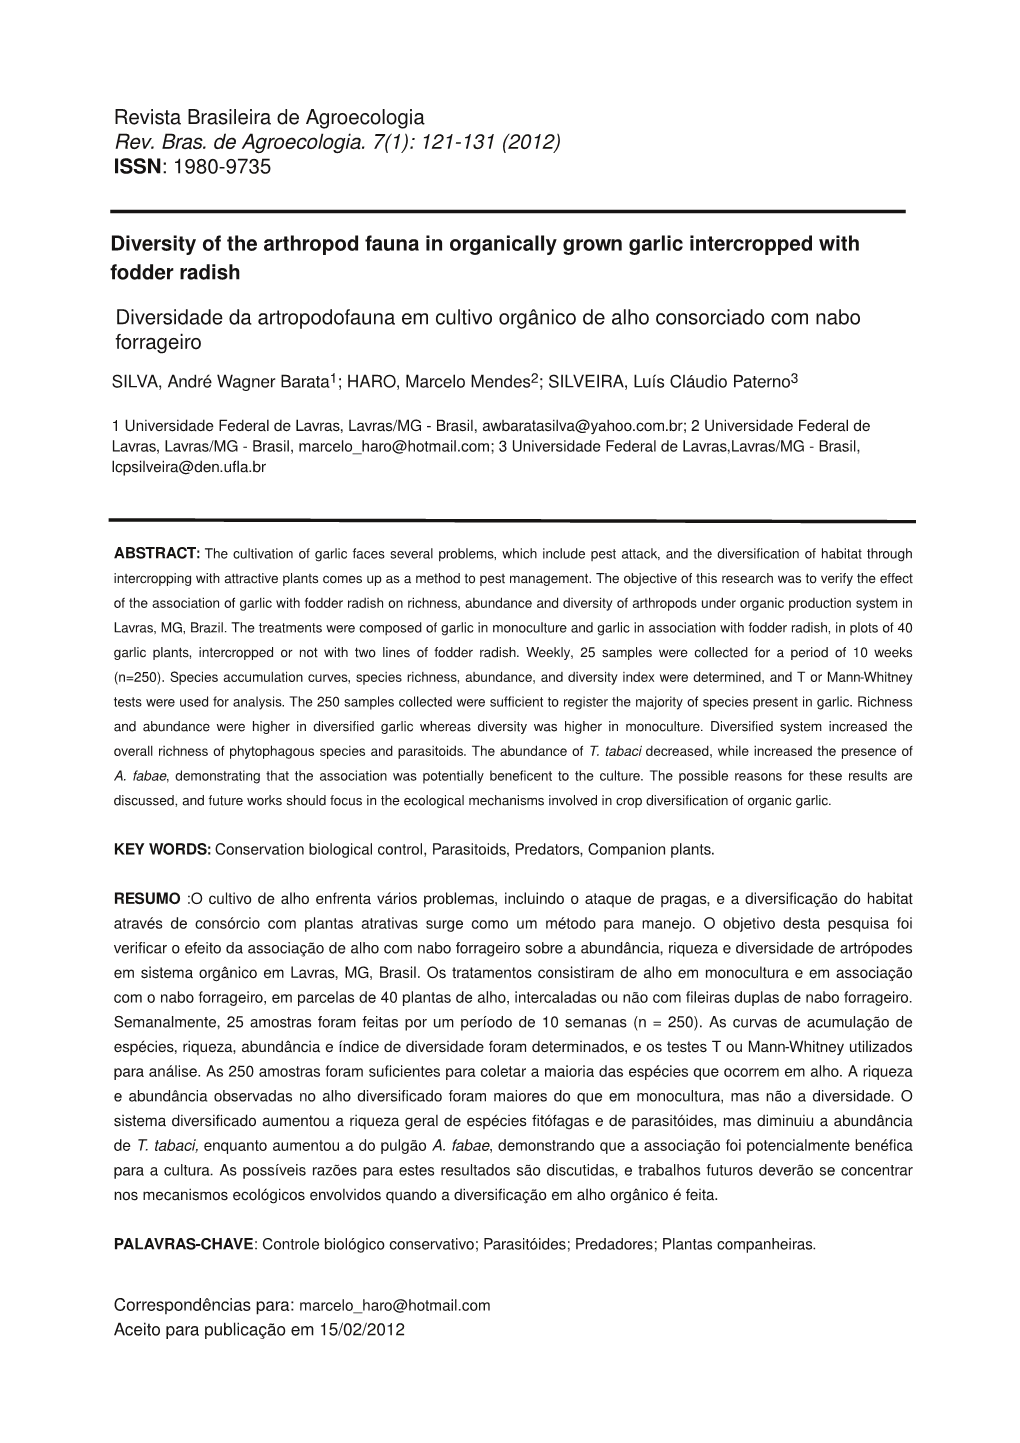 Diversity of the Arthropod Fauna in Organically Grown Garlic Intercropped with Fodder Radish